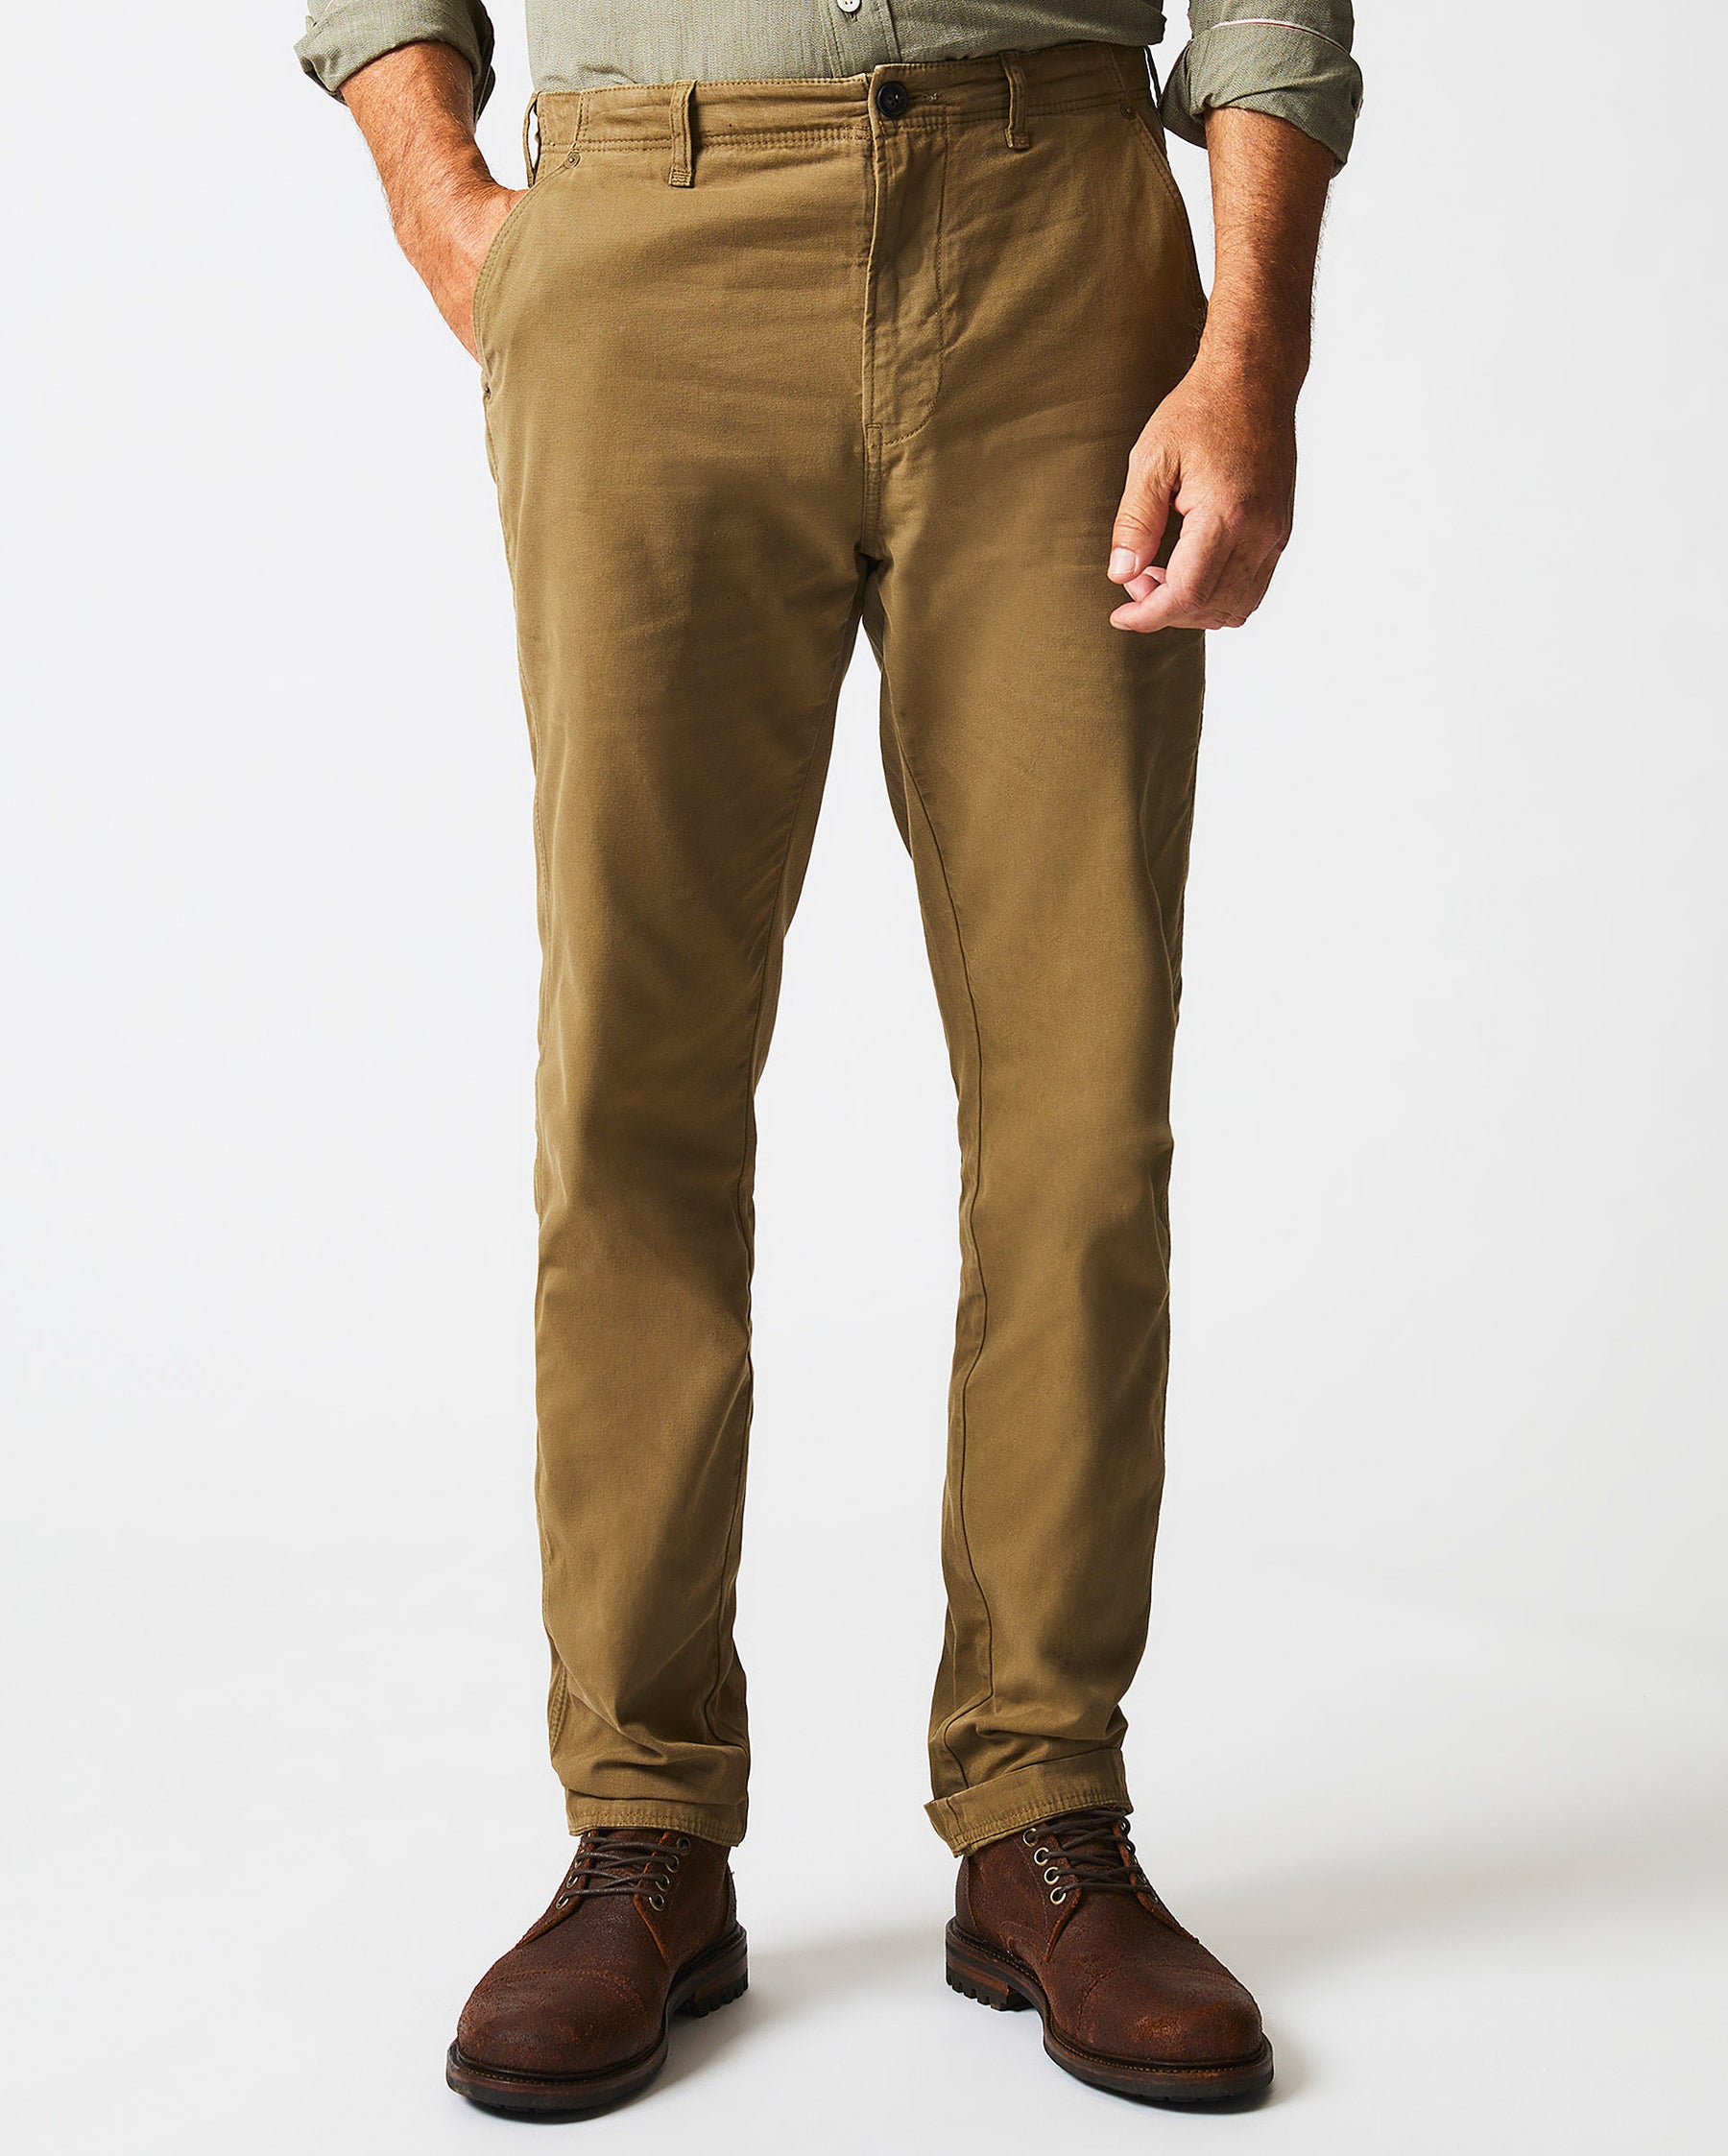 Skinny Khaki Pants Mens on Sale, SAVE 43% - piv-phuket.com